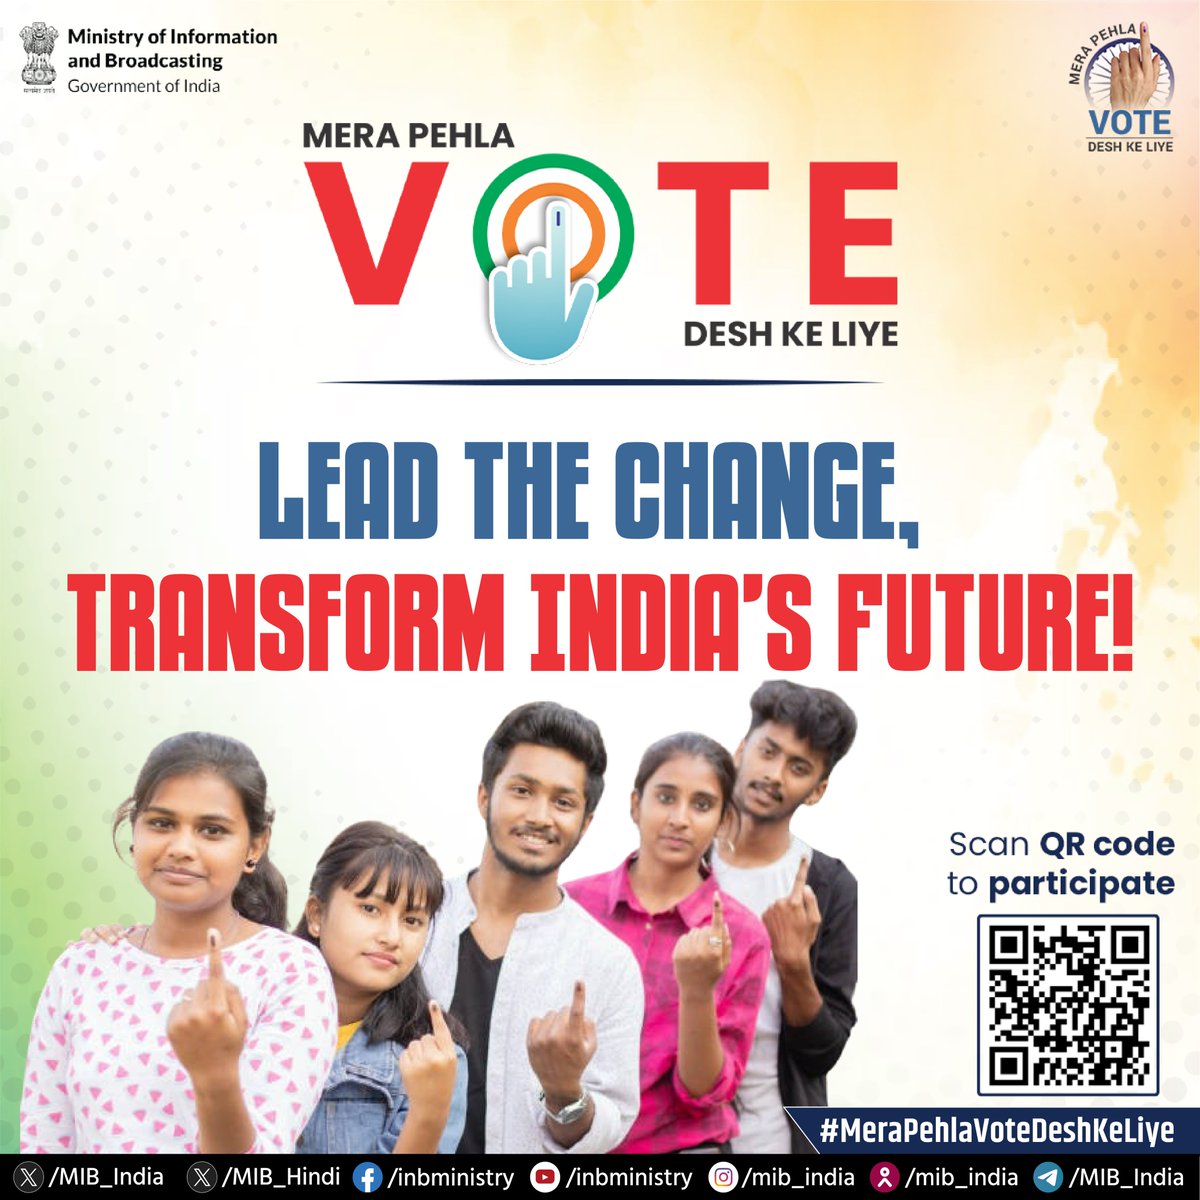 Youth has the power to transform India’s future. Cast your vote, lead the change, and shape India's tomorrow. #MeraPehlaVoteDeshKeLiye @PMOIndia @ianuragthakur @Murugan_MoS @PIB_India @airnewsalerts @DDNewslive @ECISVEEP